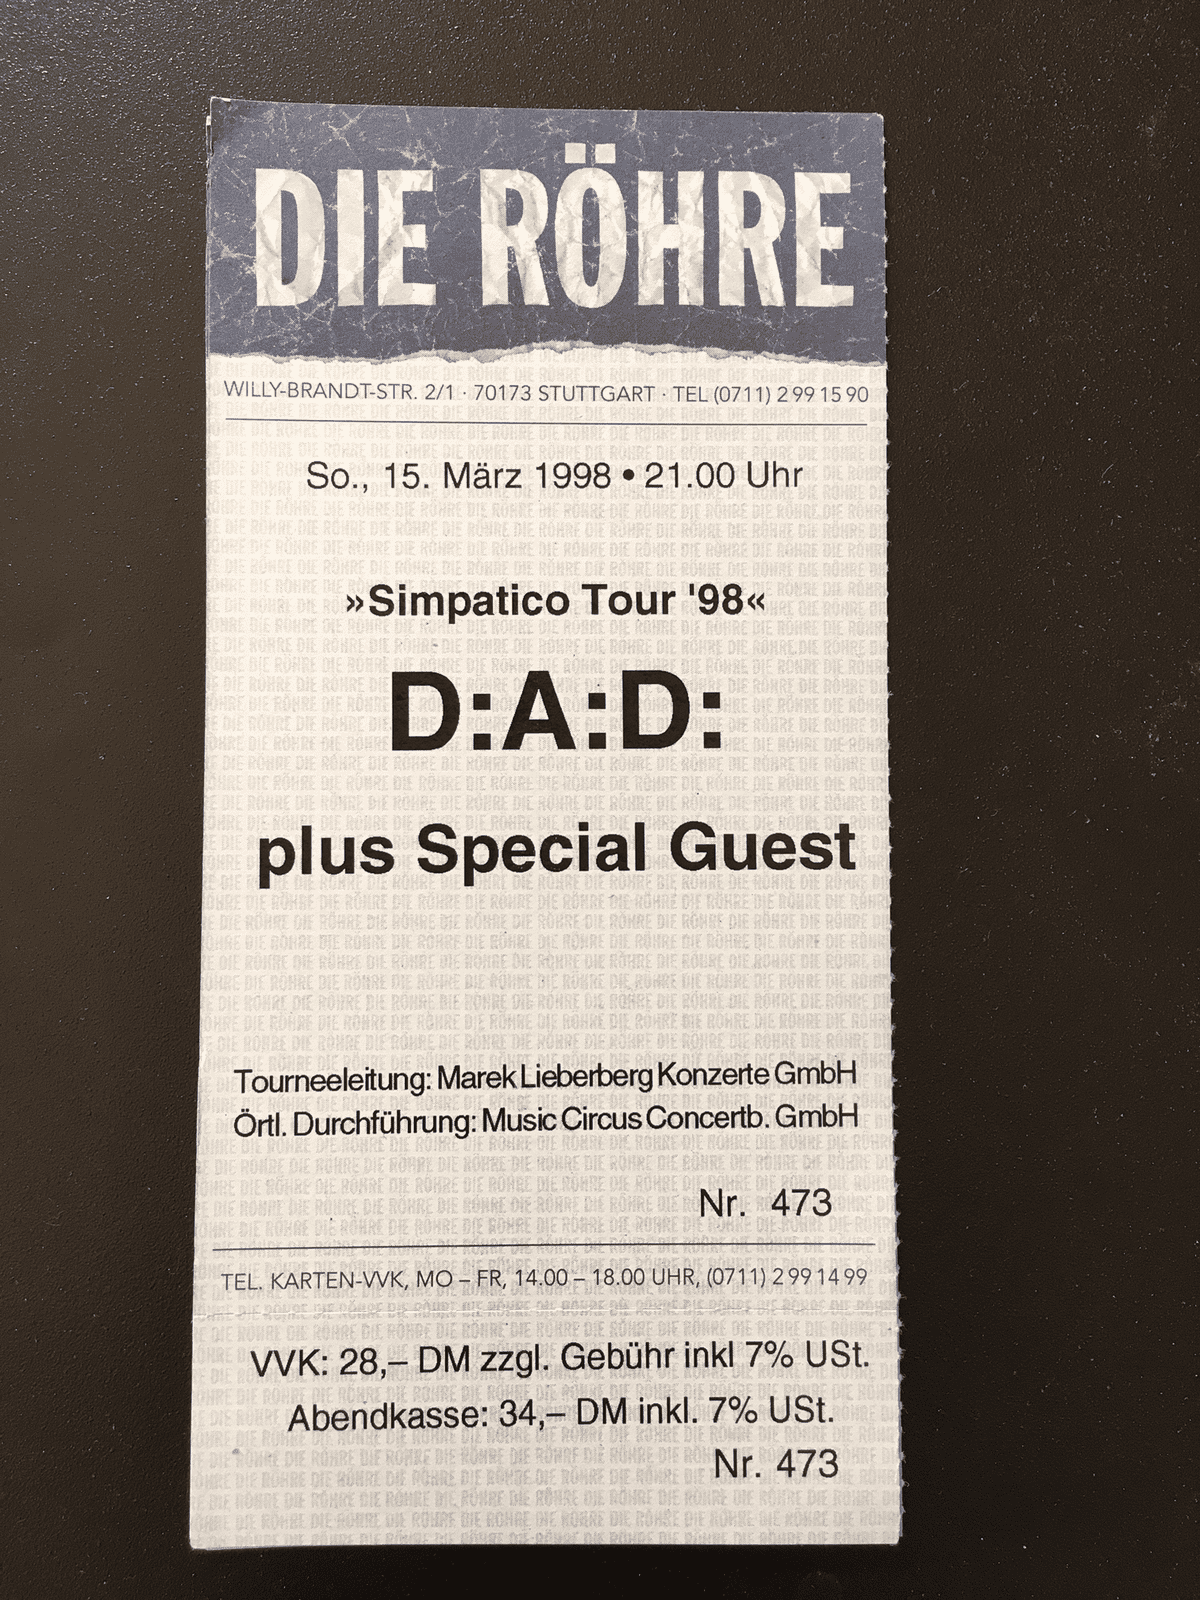 TICKET FOR DIE RÖHRE, STUTTGART (DE), MARCH 15 1998